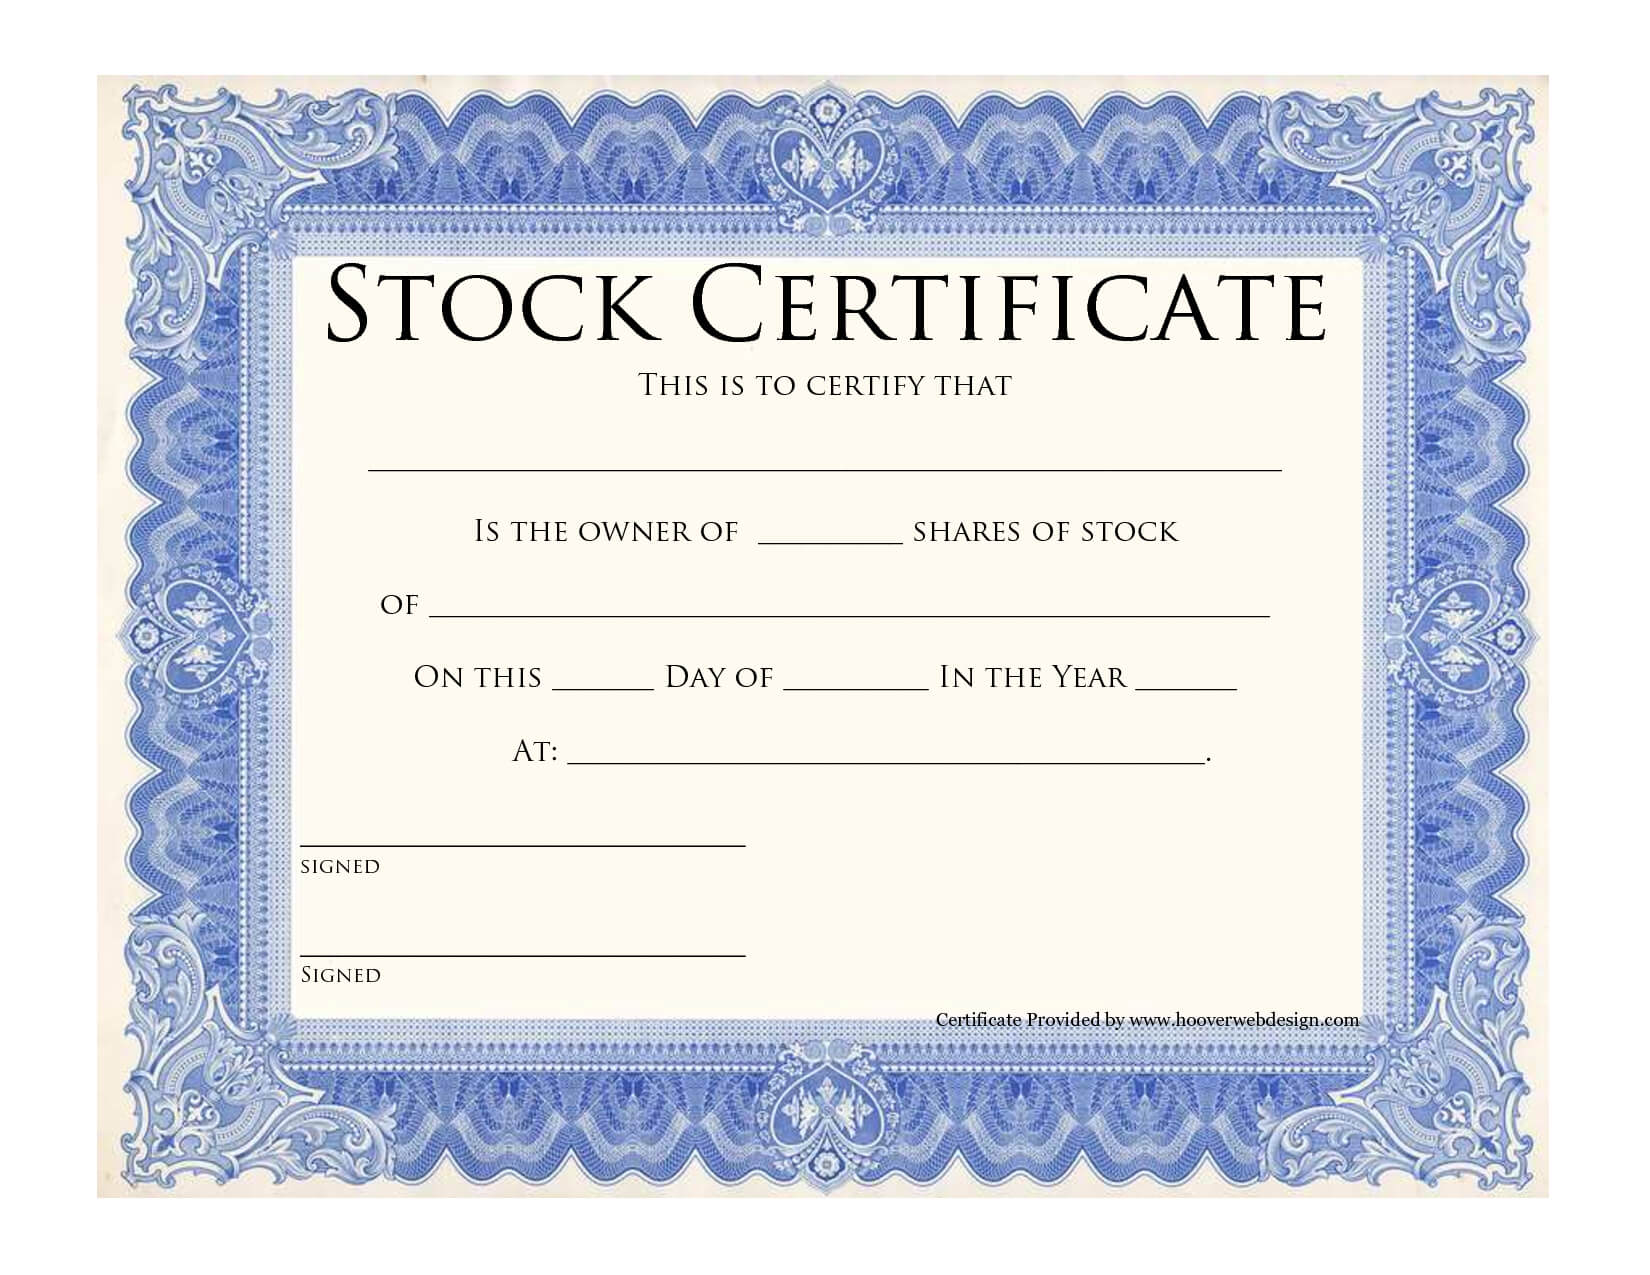 Blank Stock Certificate Template | Printable Stock Regarding Free Stock Certificate Template Download